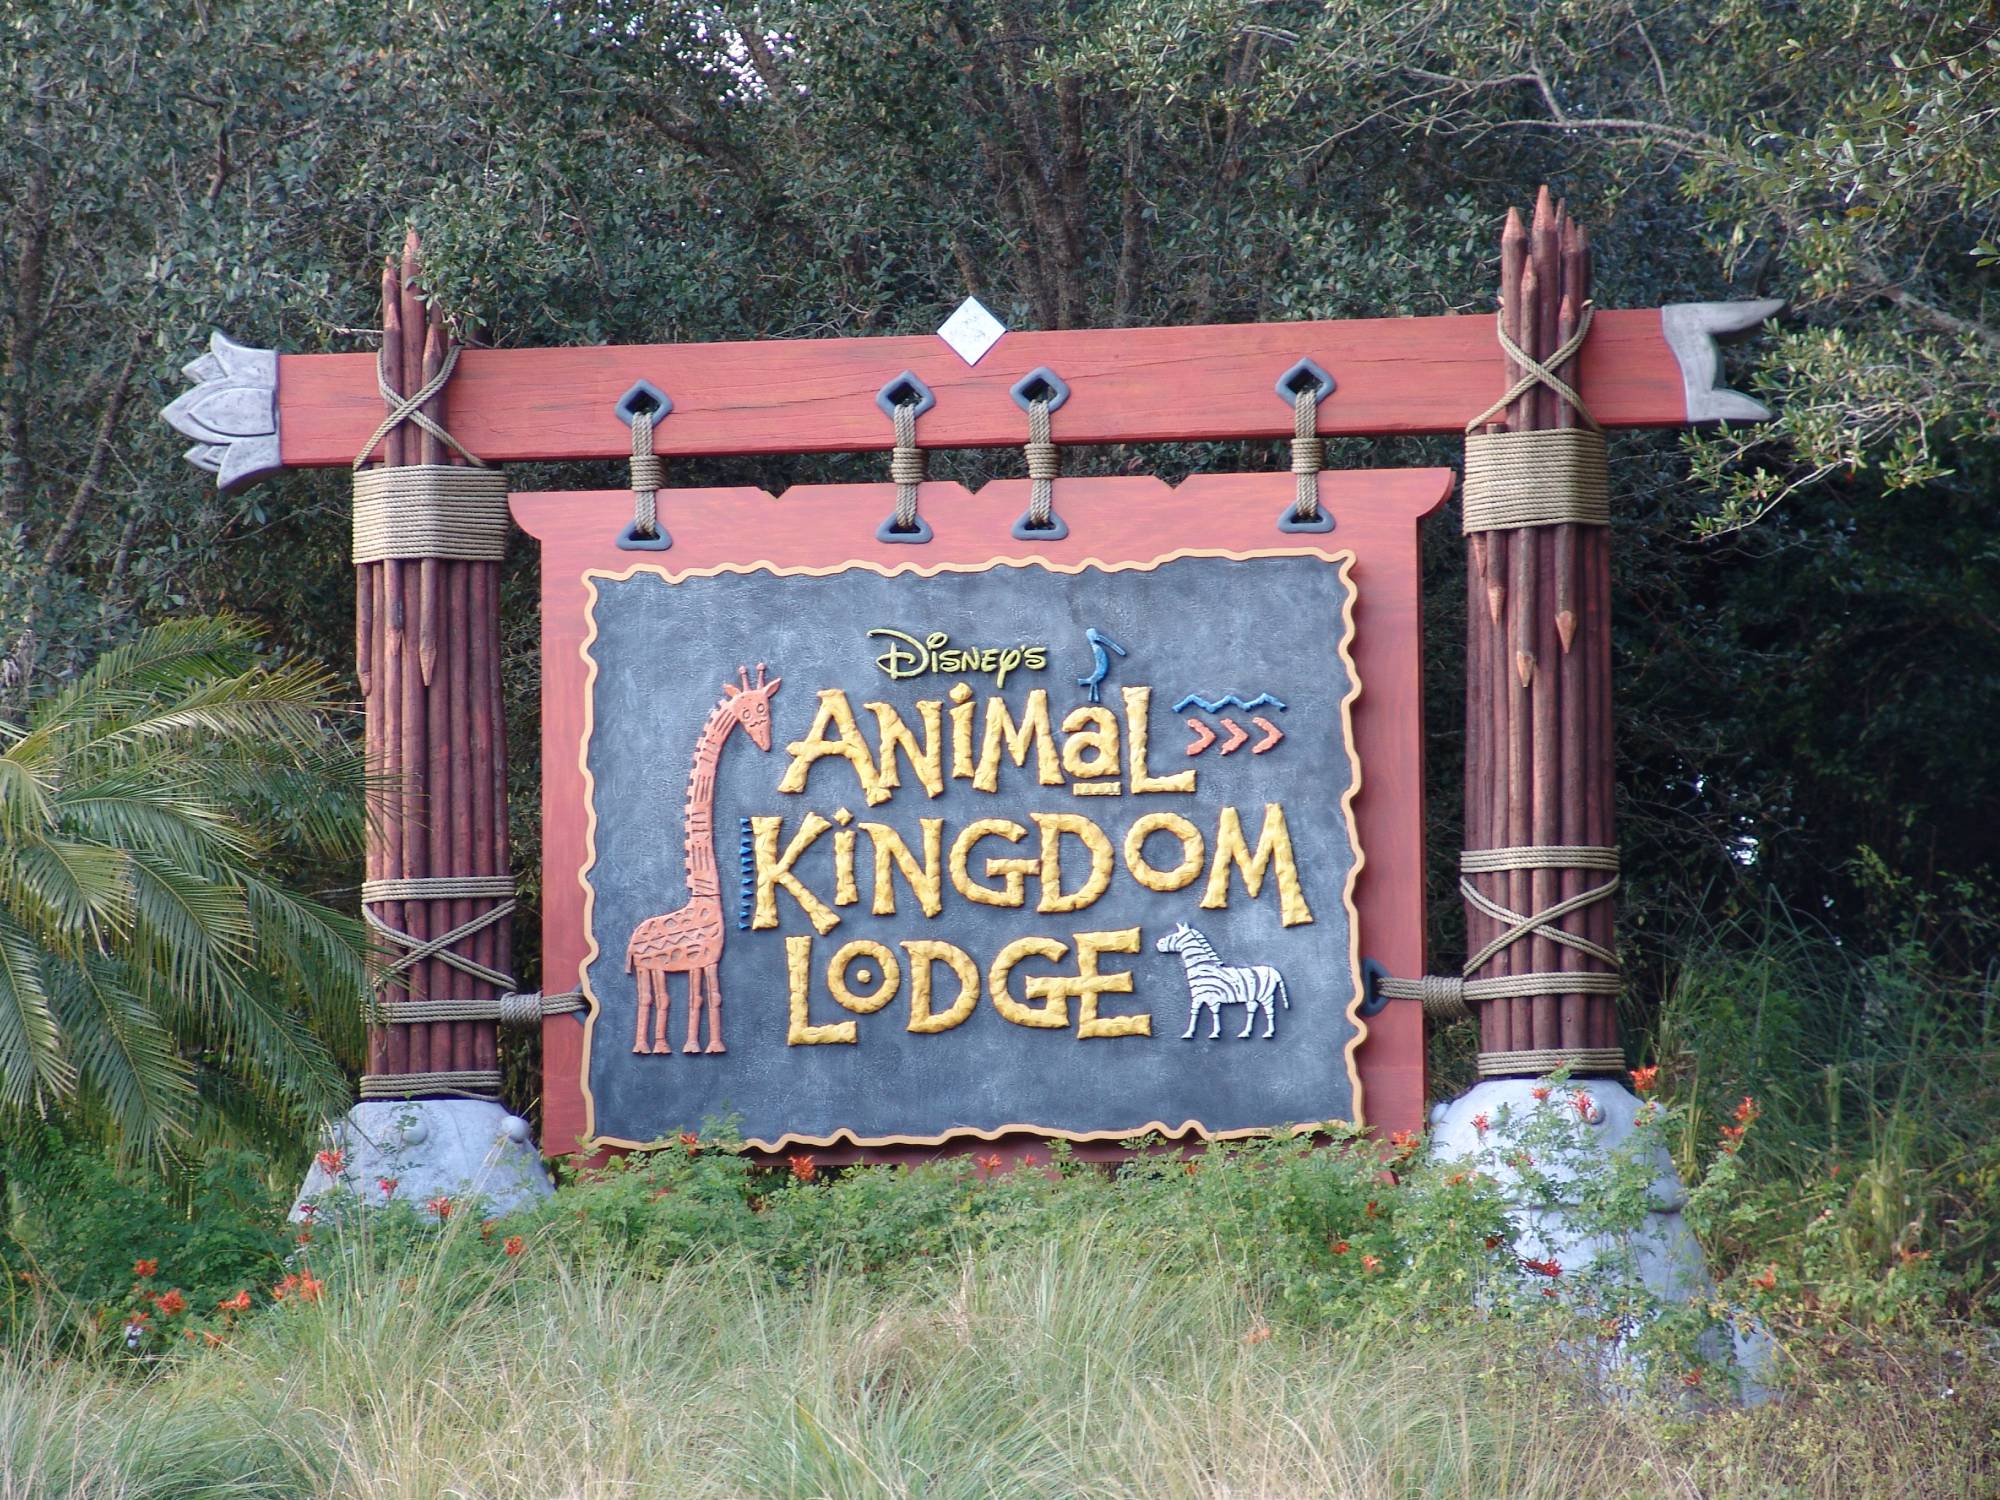 Animal Kingdom Lodge - sign